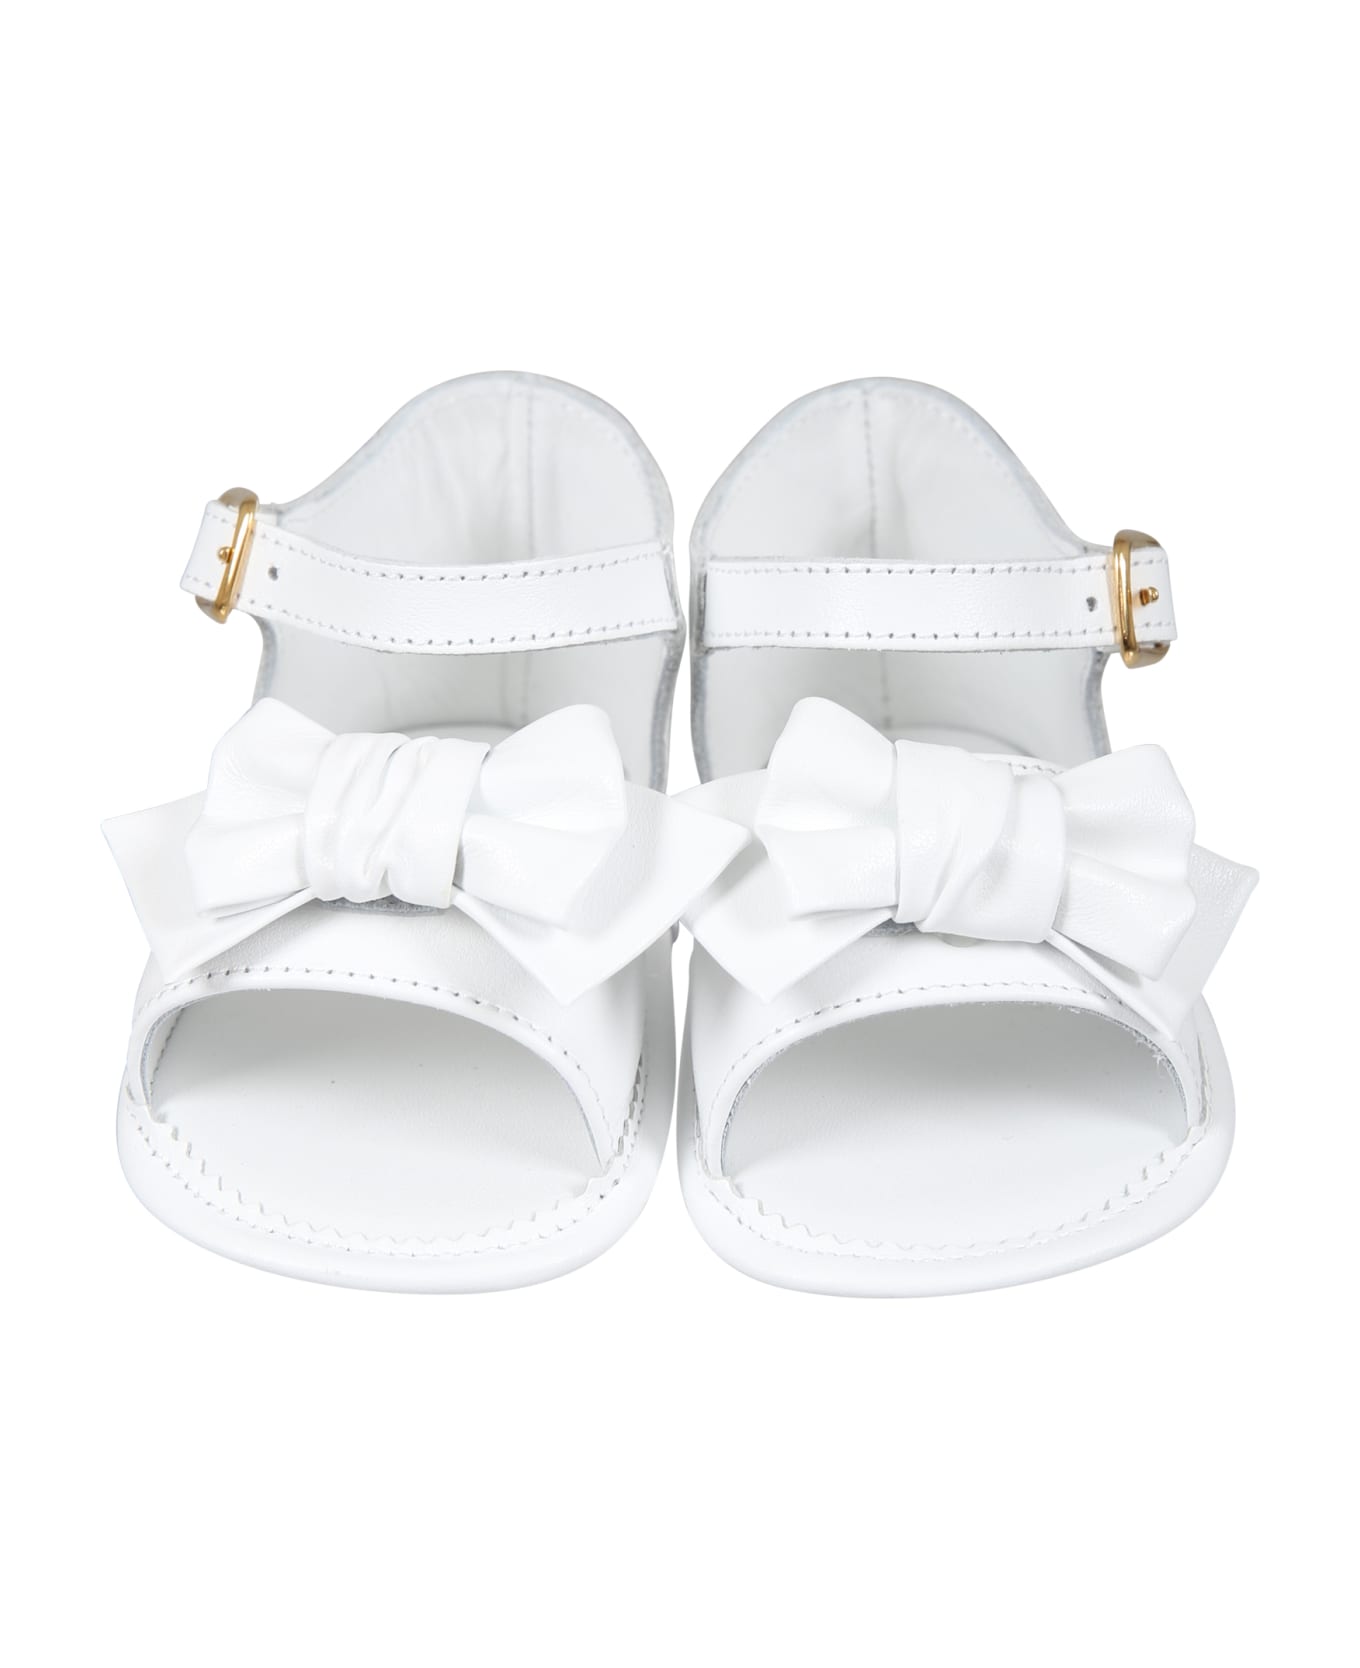 Balmain White Sandals For Baby Girl With Logo - White